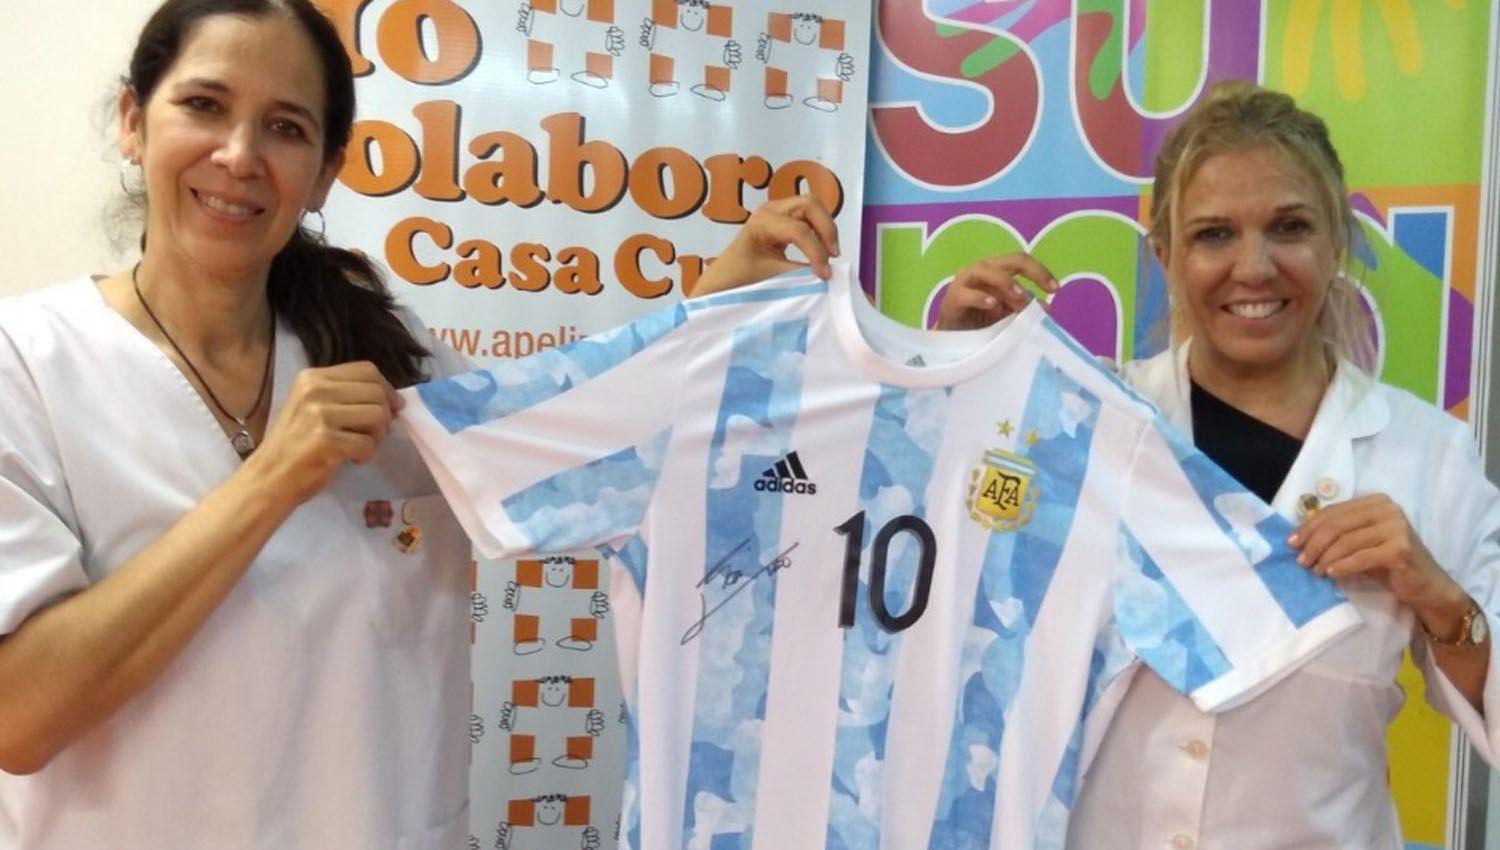 Lionel Messi firmoacute camiseta que seraacute subastada a total beneficio del Hospital de Nintildeos ldquoPedro de Elizalderdquo de Argentina